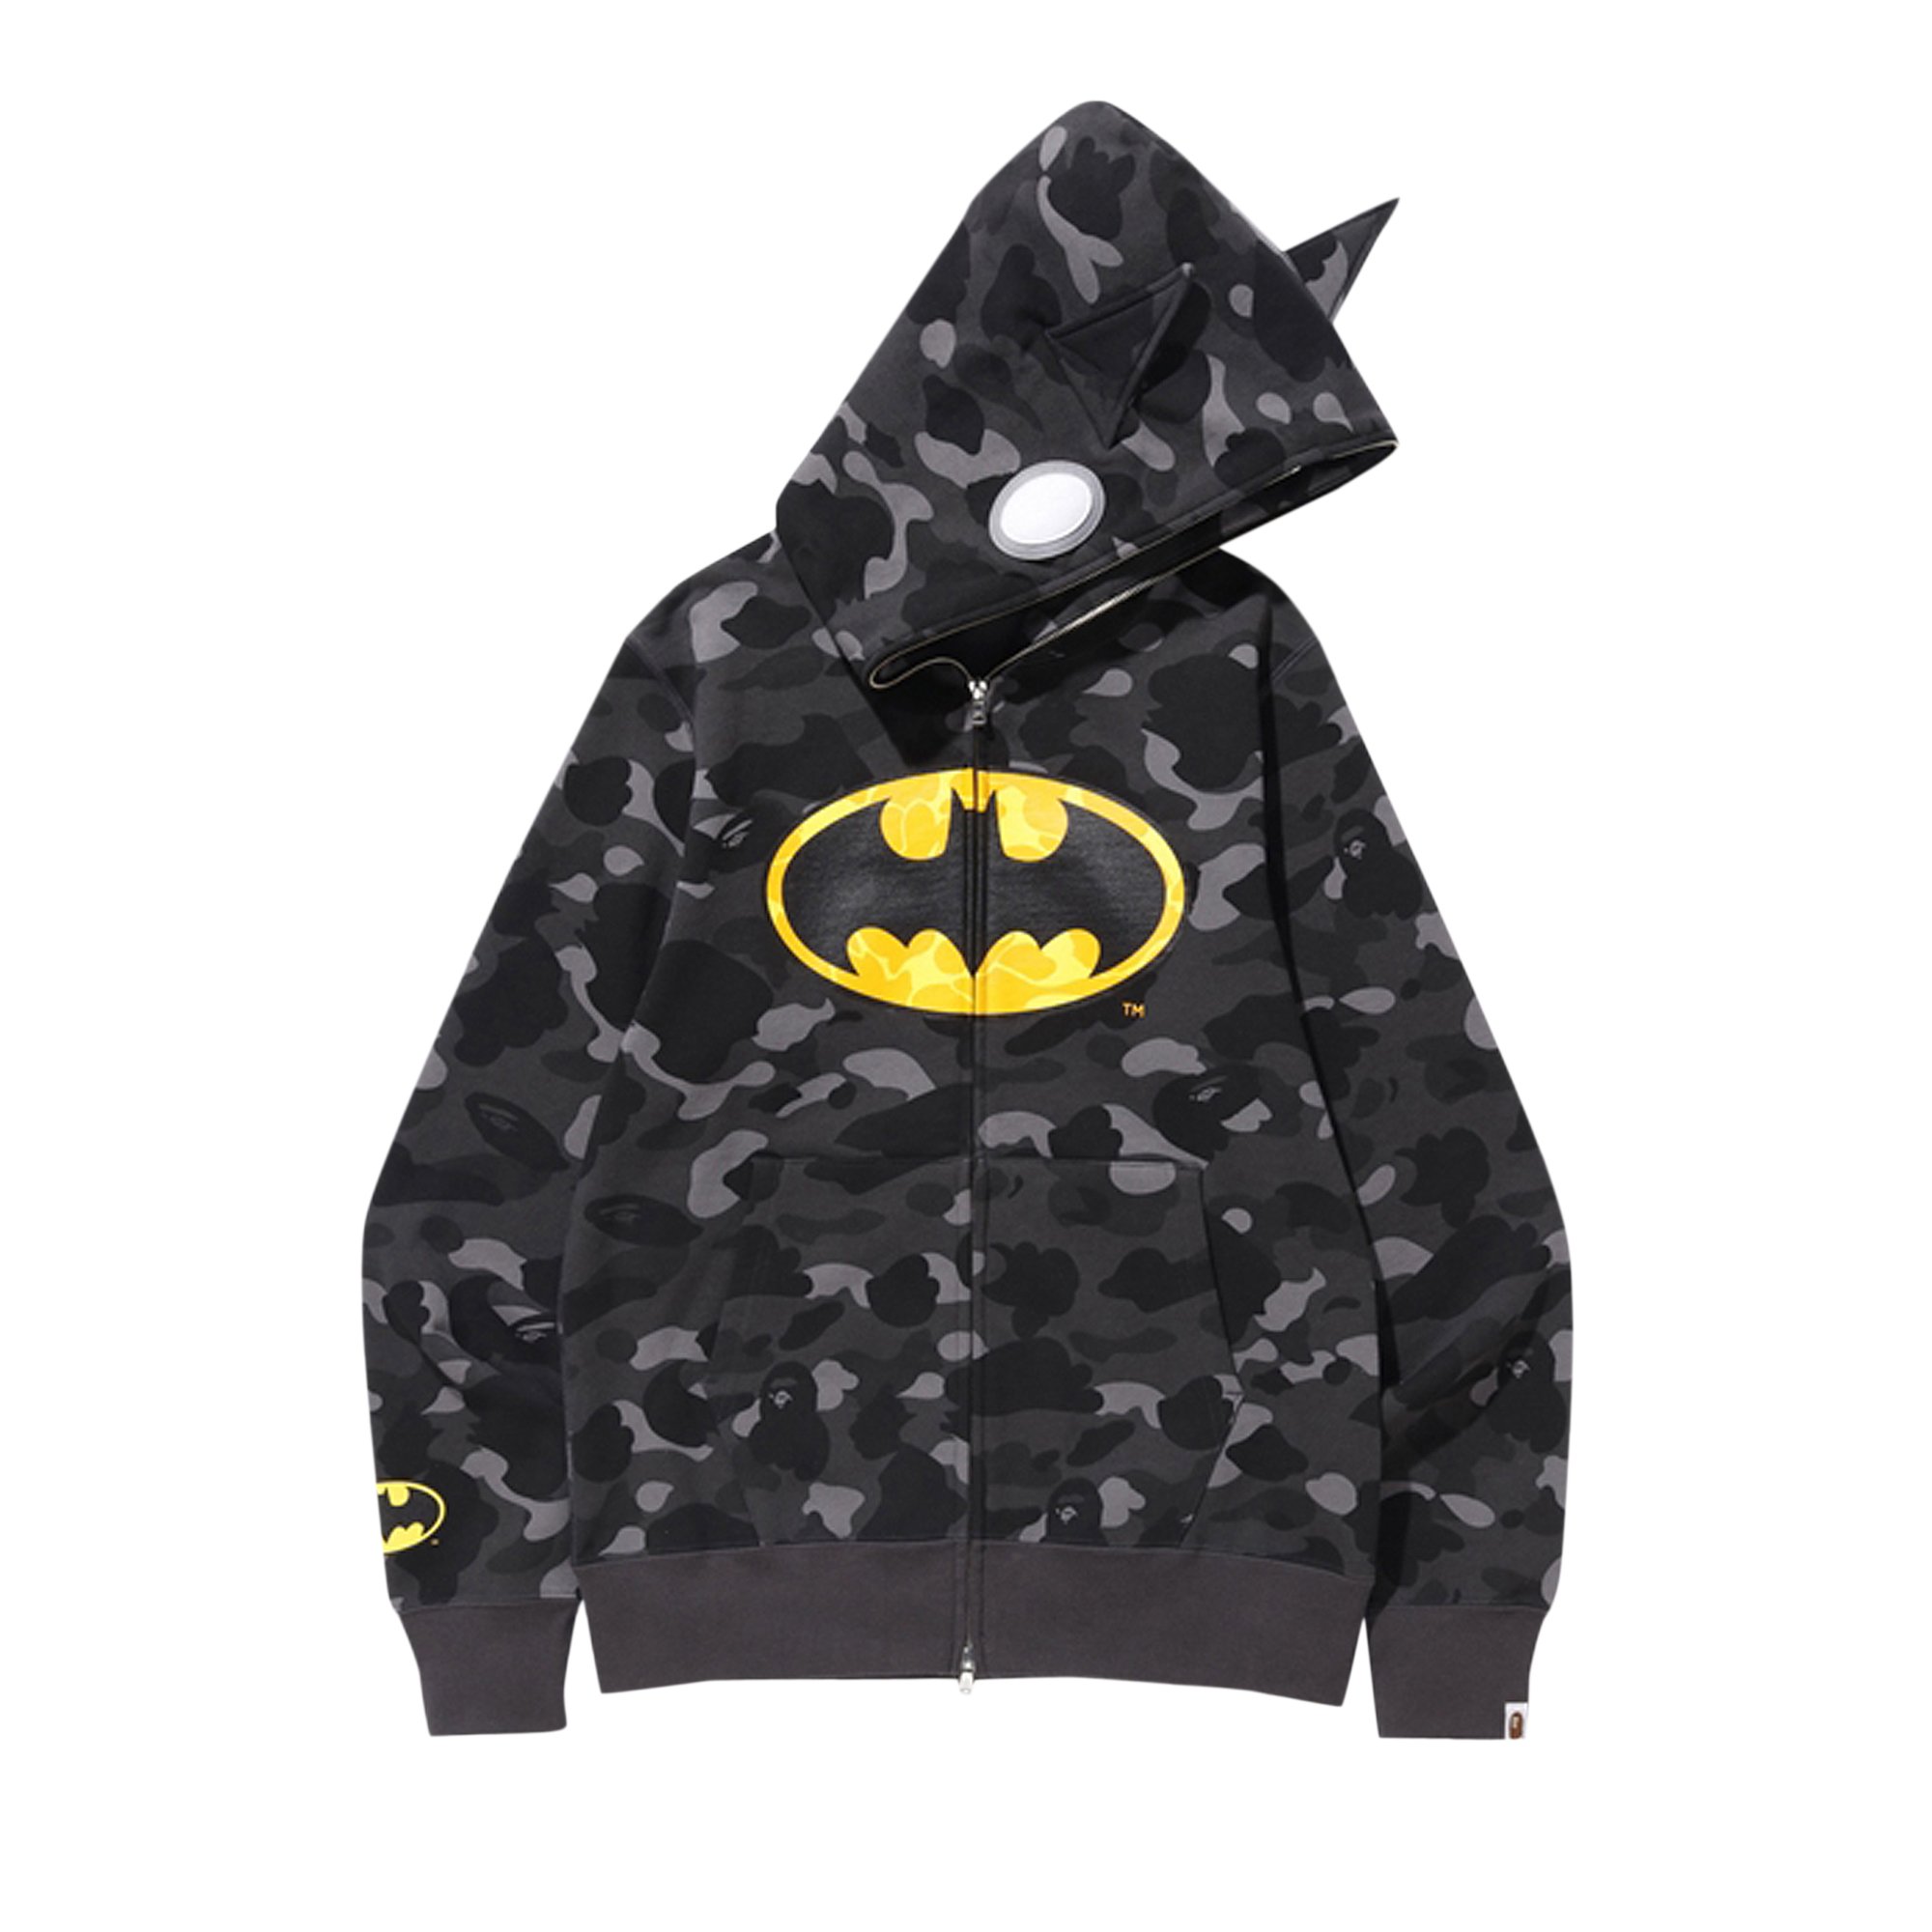 Buy BAPE x DC Batman Color Camo Full Zip Hoodie #1 'Black' - 0039 